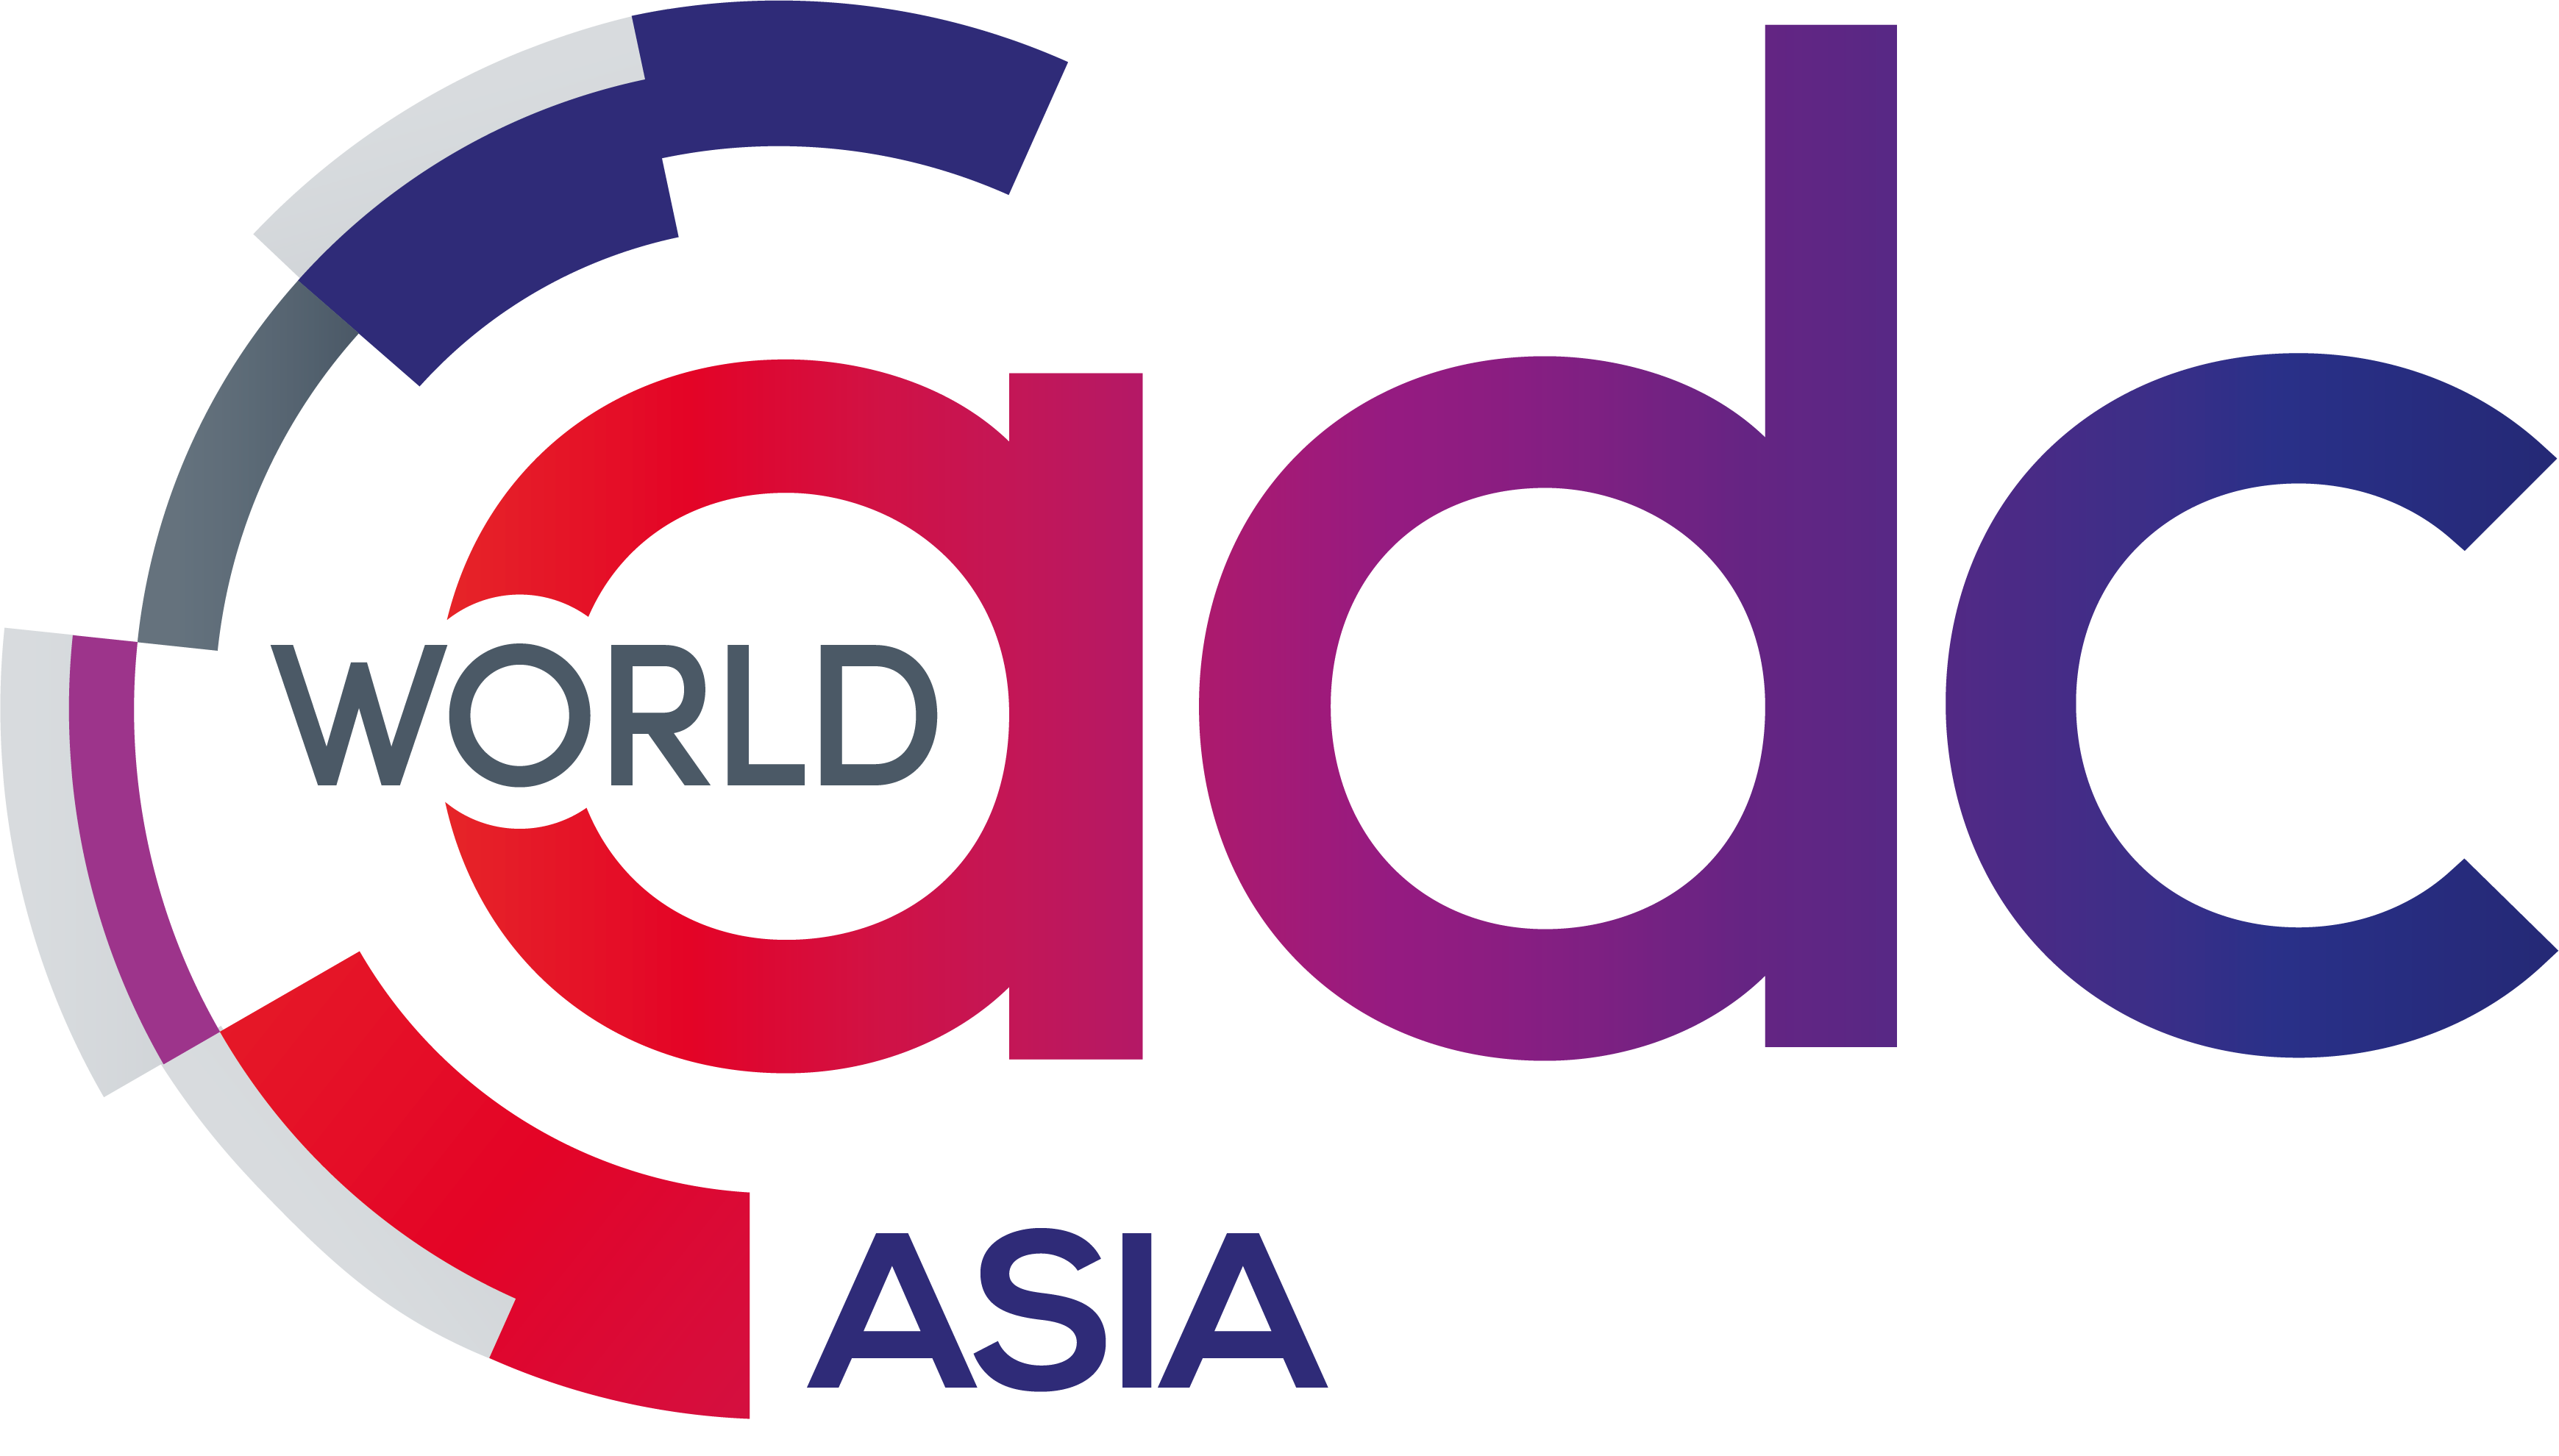 HW231002-World-ADC-Asia-NO-DATE-logo-1-1